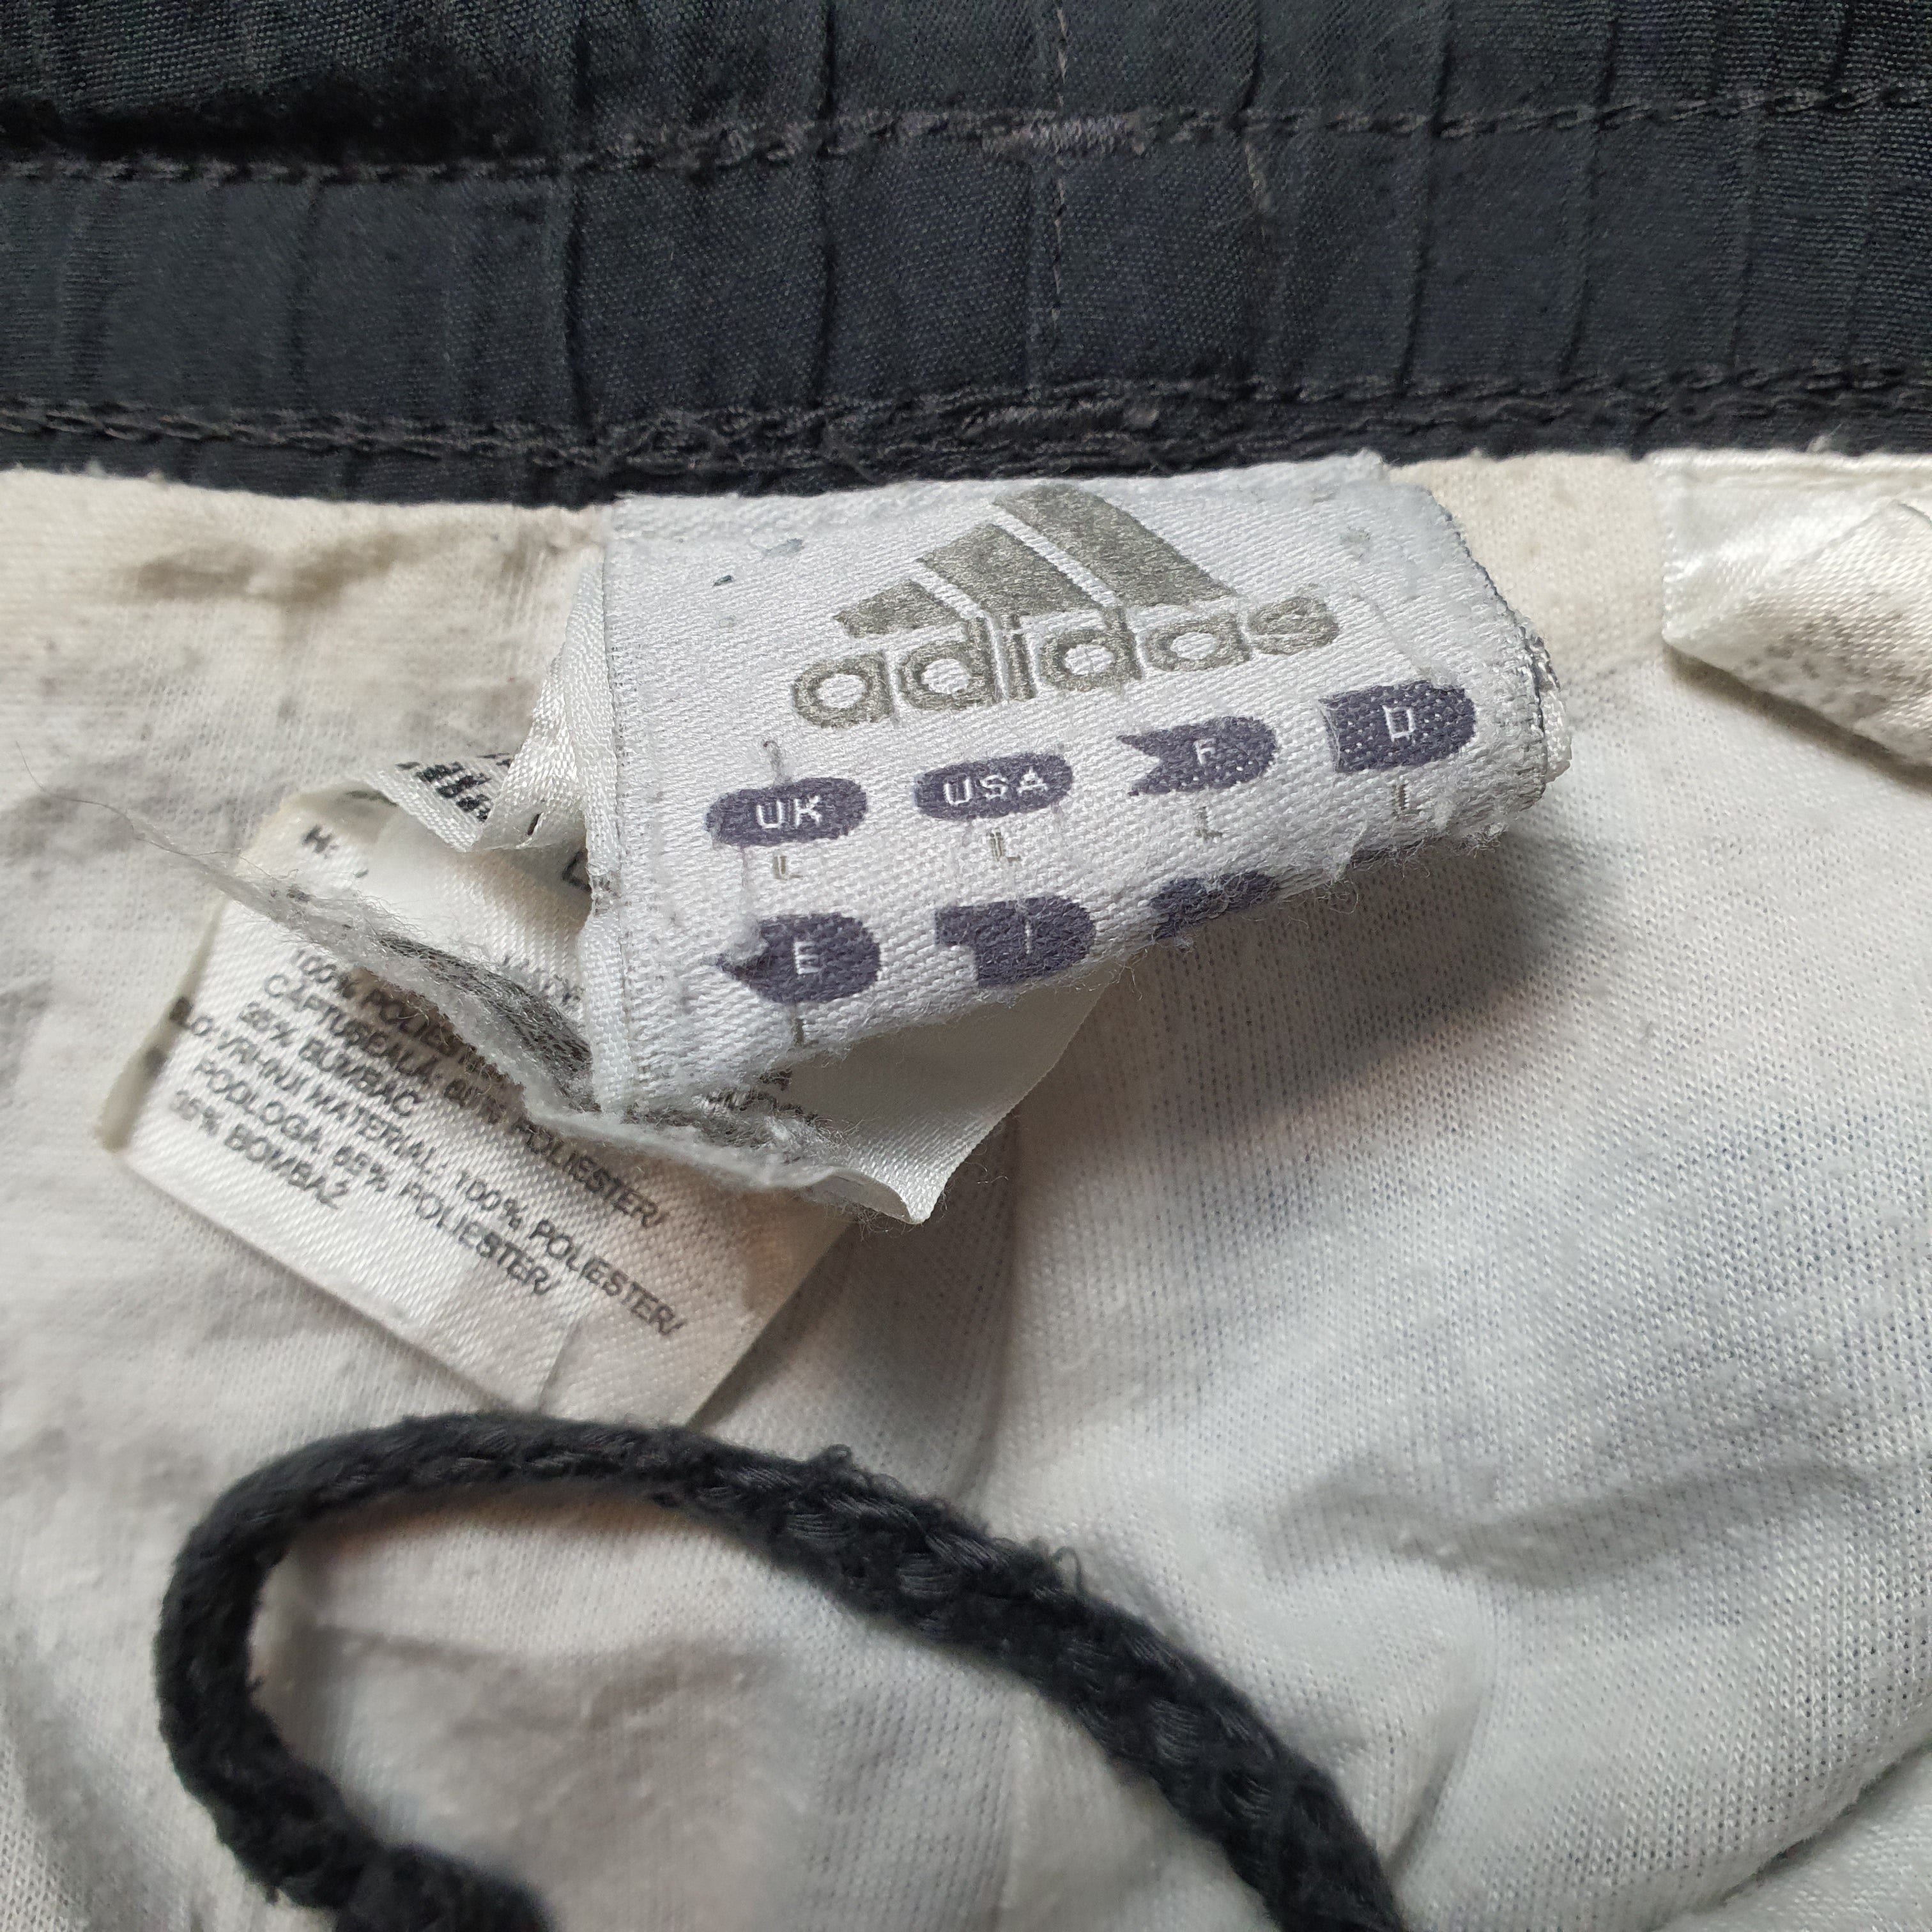 [L] Adidas Trackpants